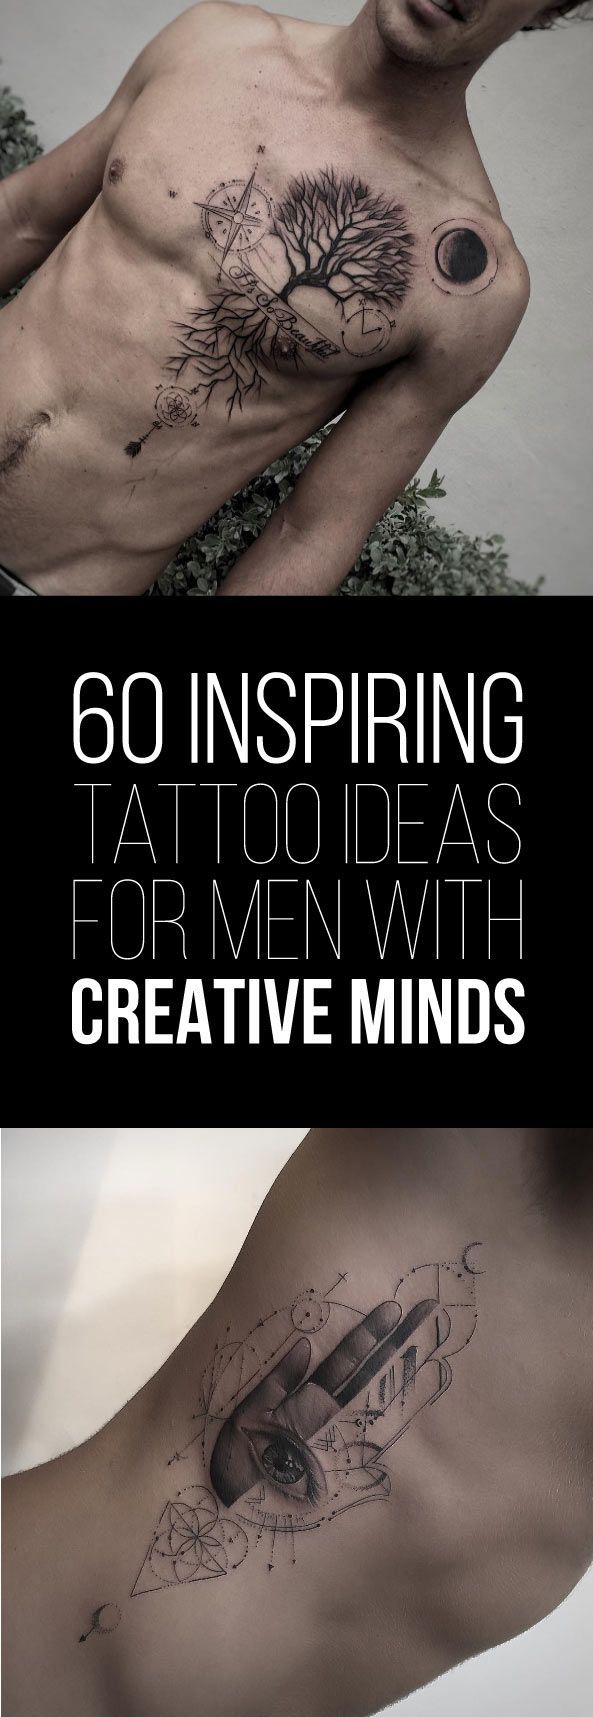 Positive Tattoo Ideas | POPSUGAR Smart Living